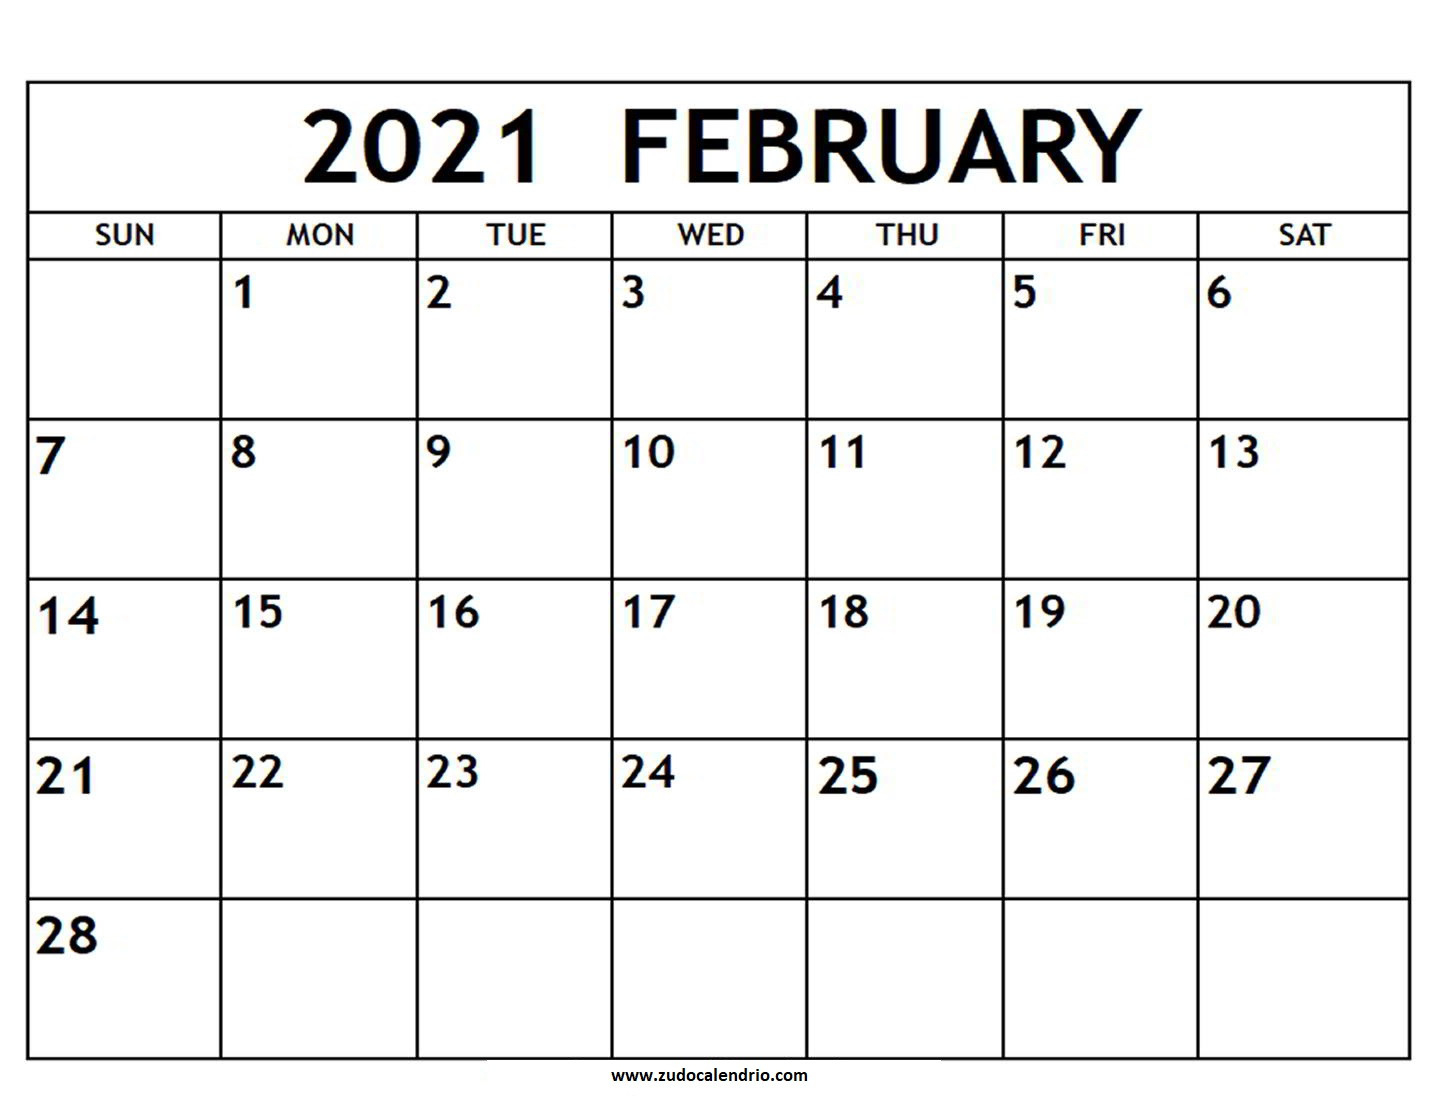 February 2021 Calendar With Notes | Zudocalendrio-Free Blank Printable Monthly Calendar 2021